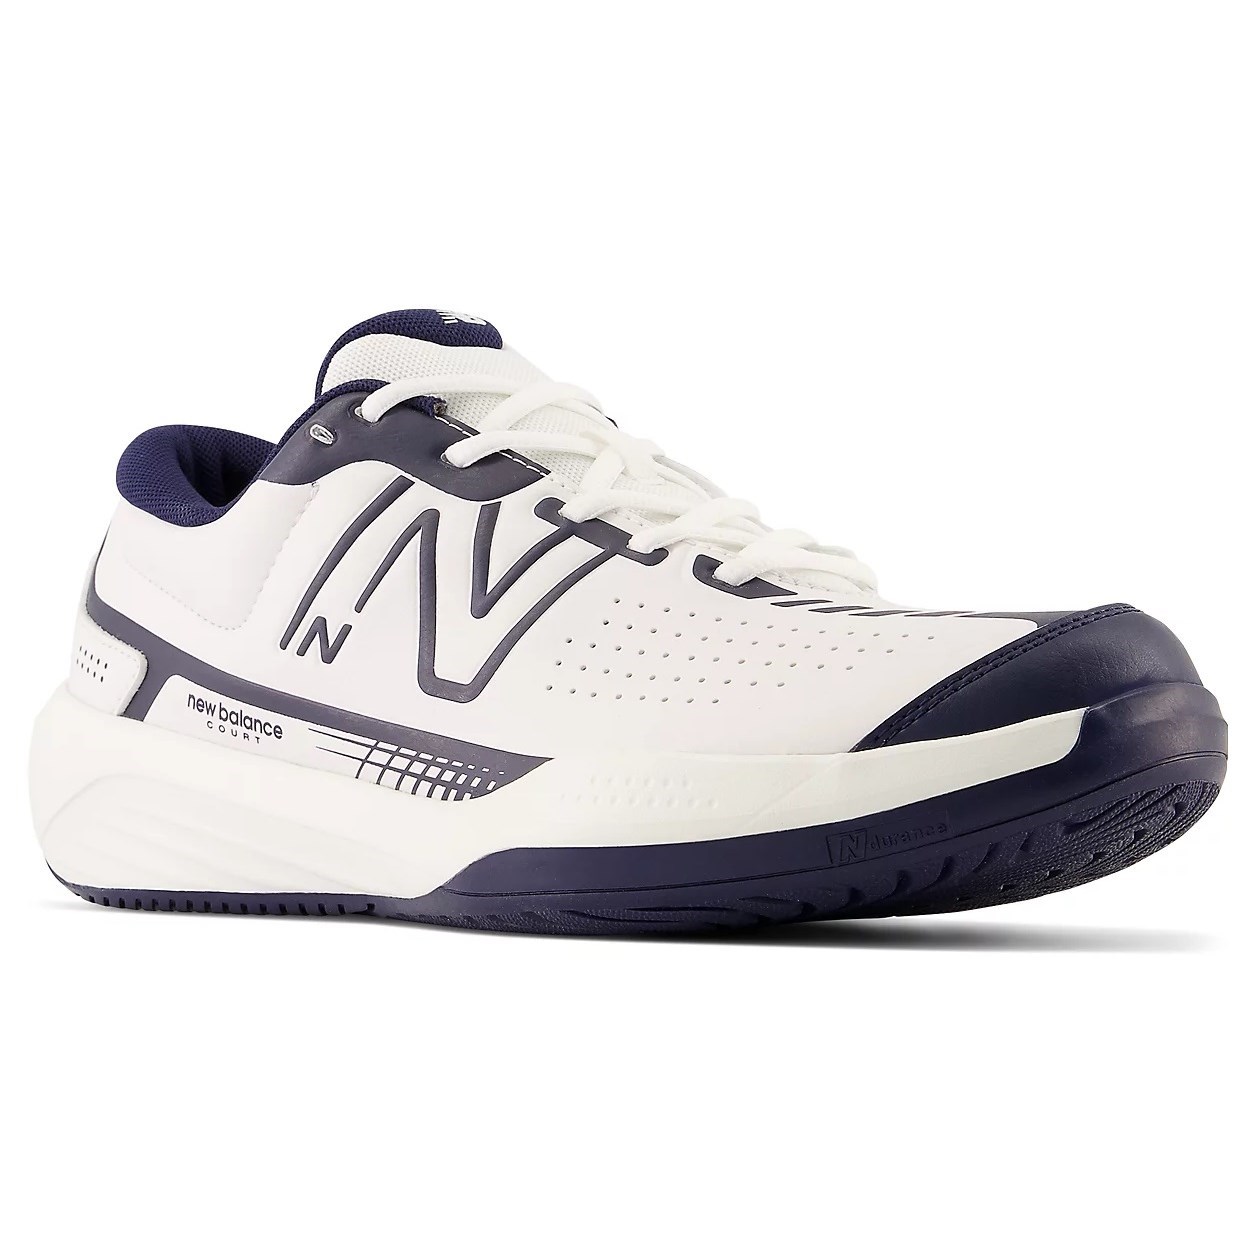 New Balance 696v5 - Mens Tennis Shoes - White/Navy | Sportitude